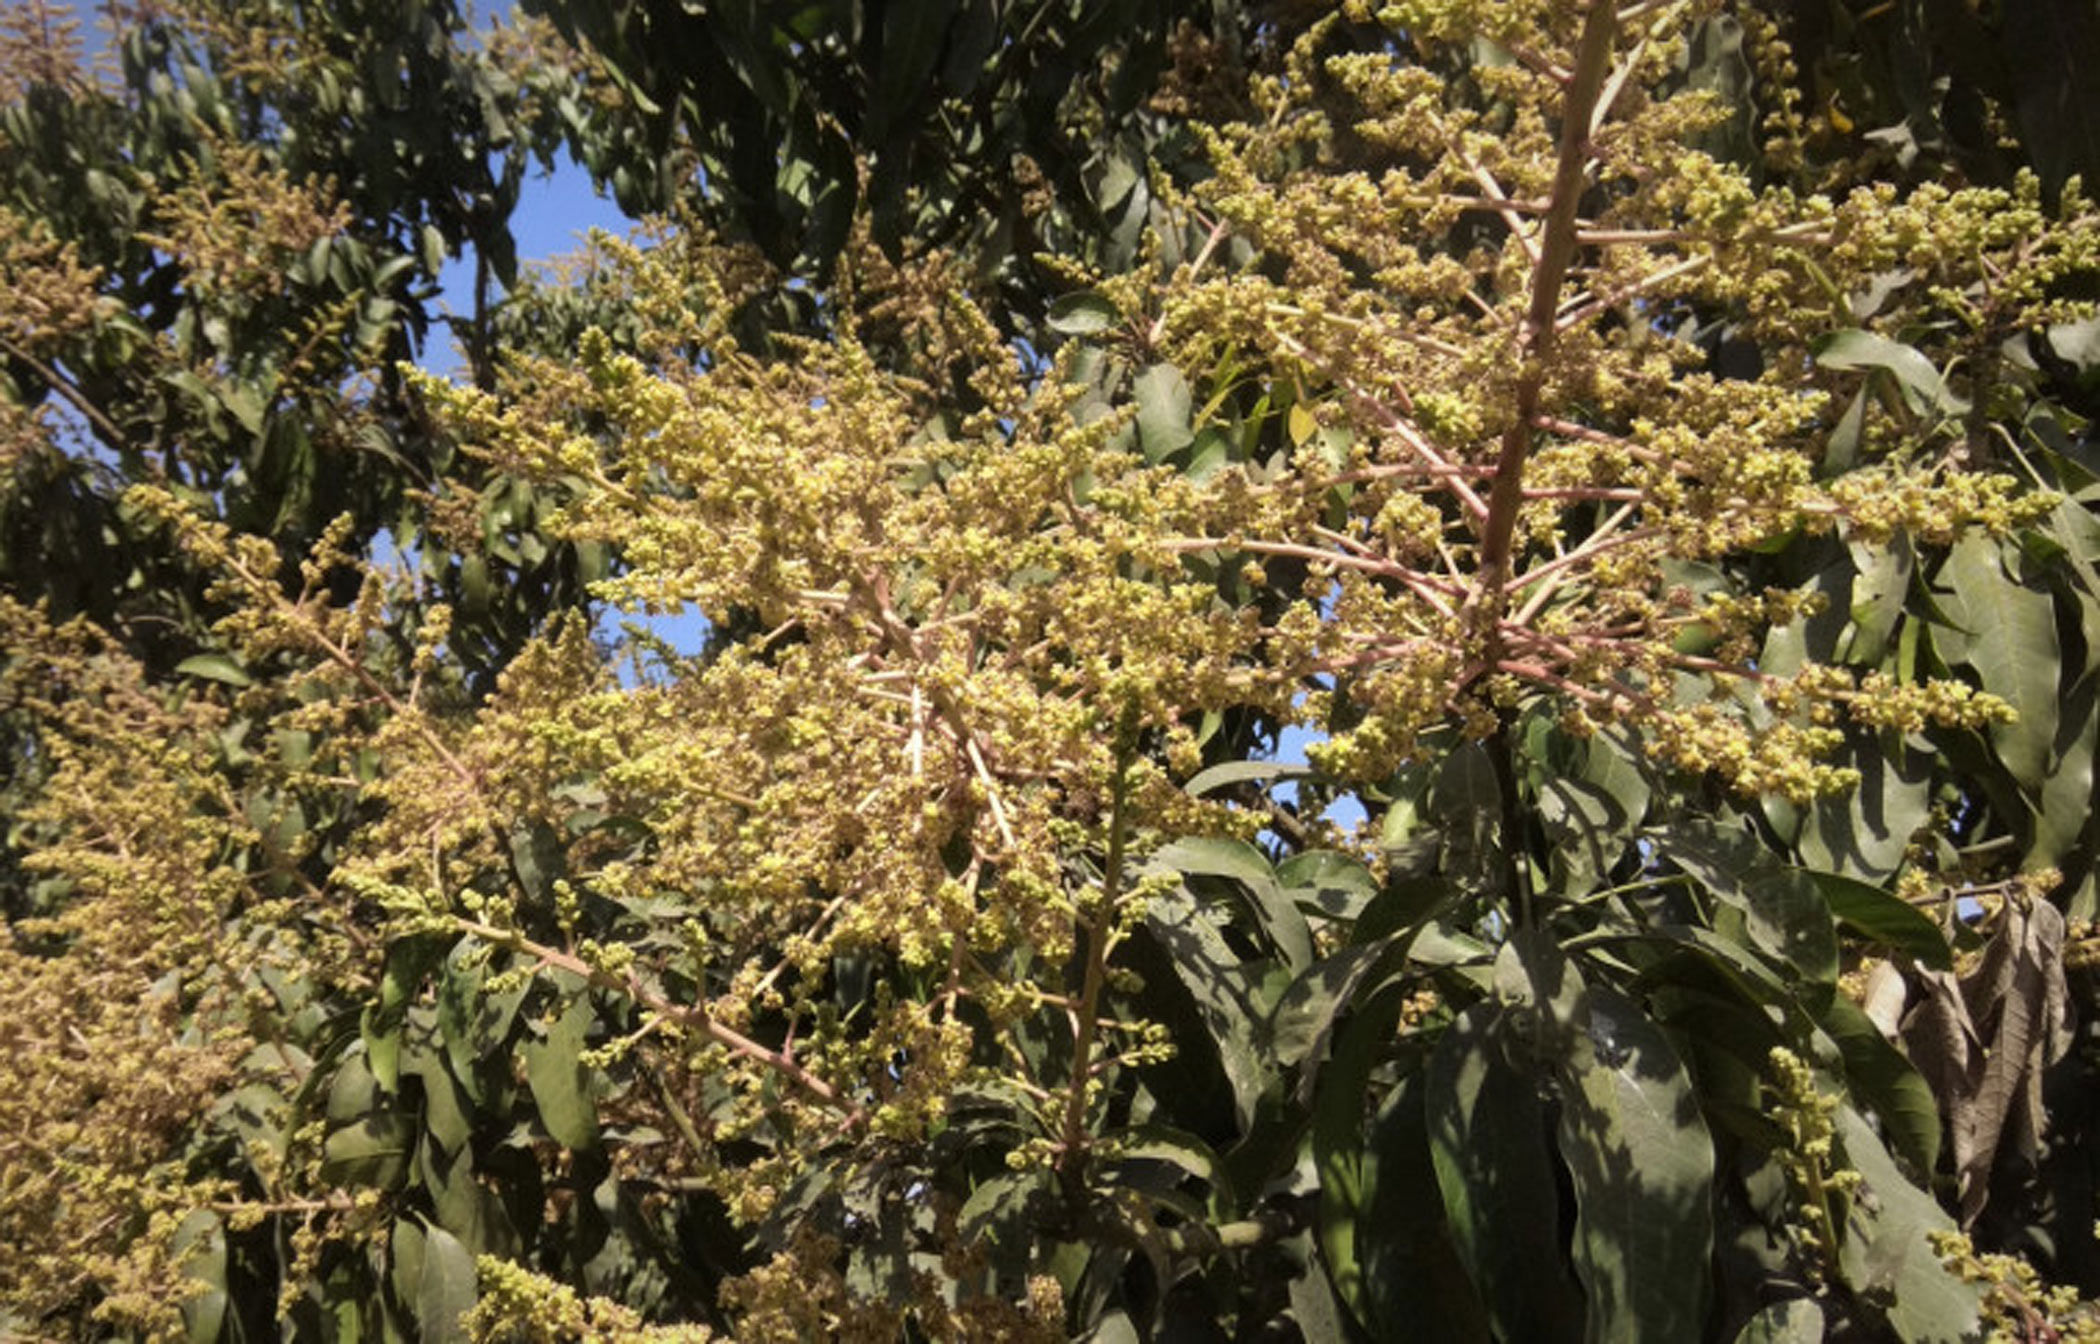 Mango tree in full bloom